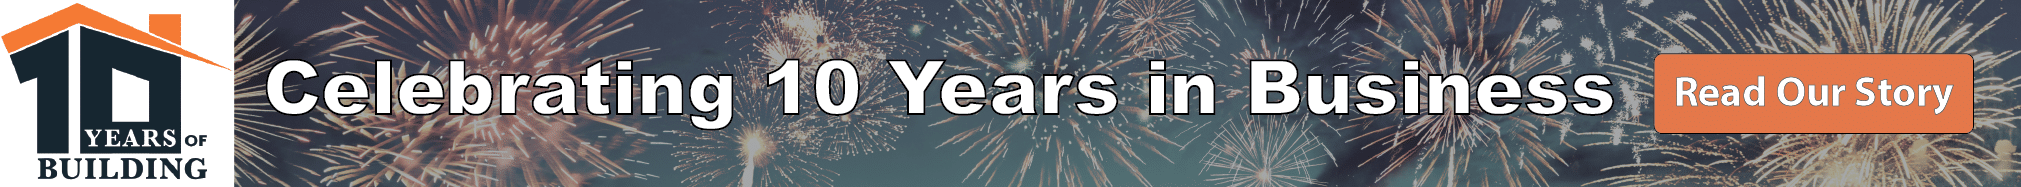 Celebrating 10 years banner1